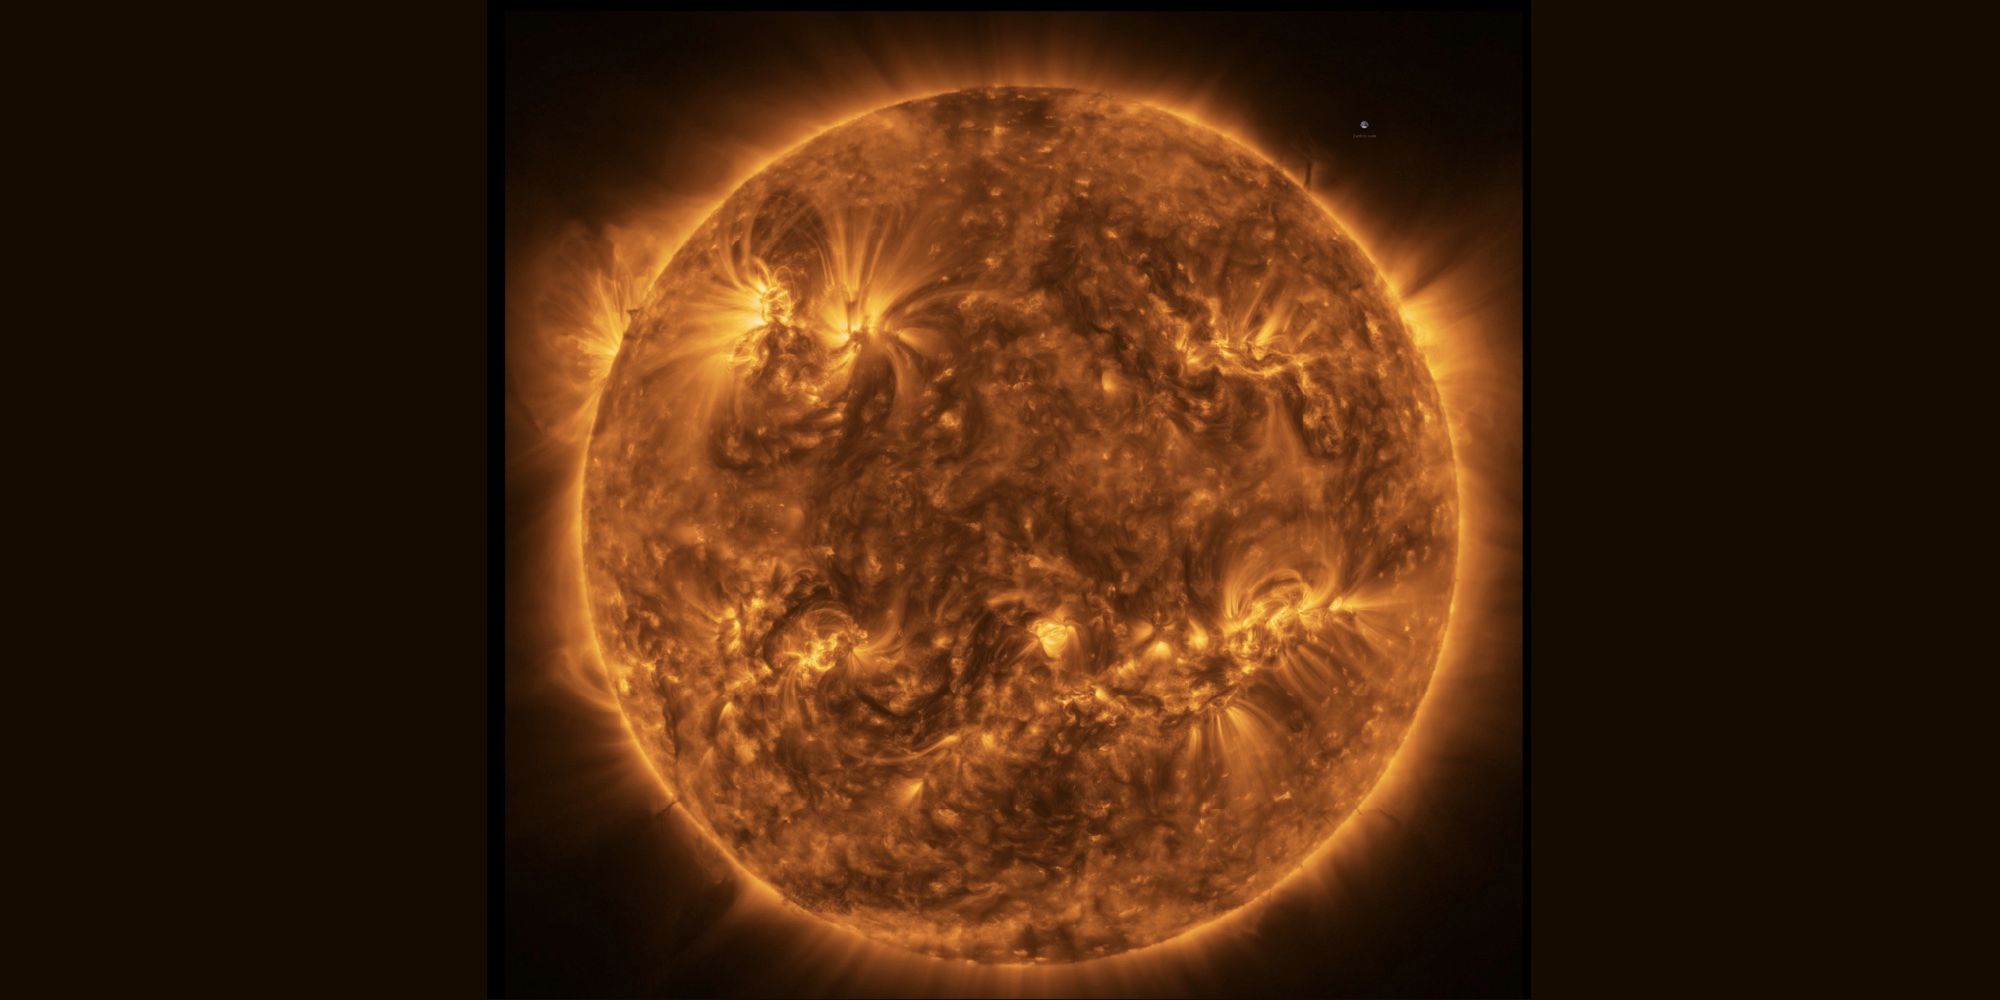 High Resolution Image Of the Sun via ESA